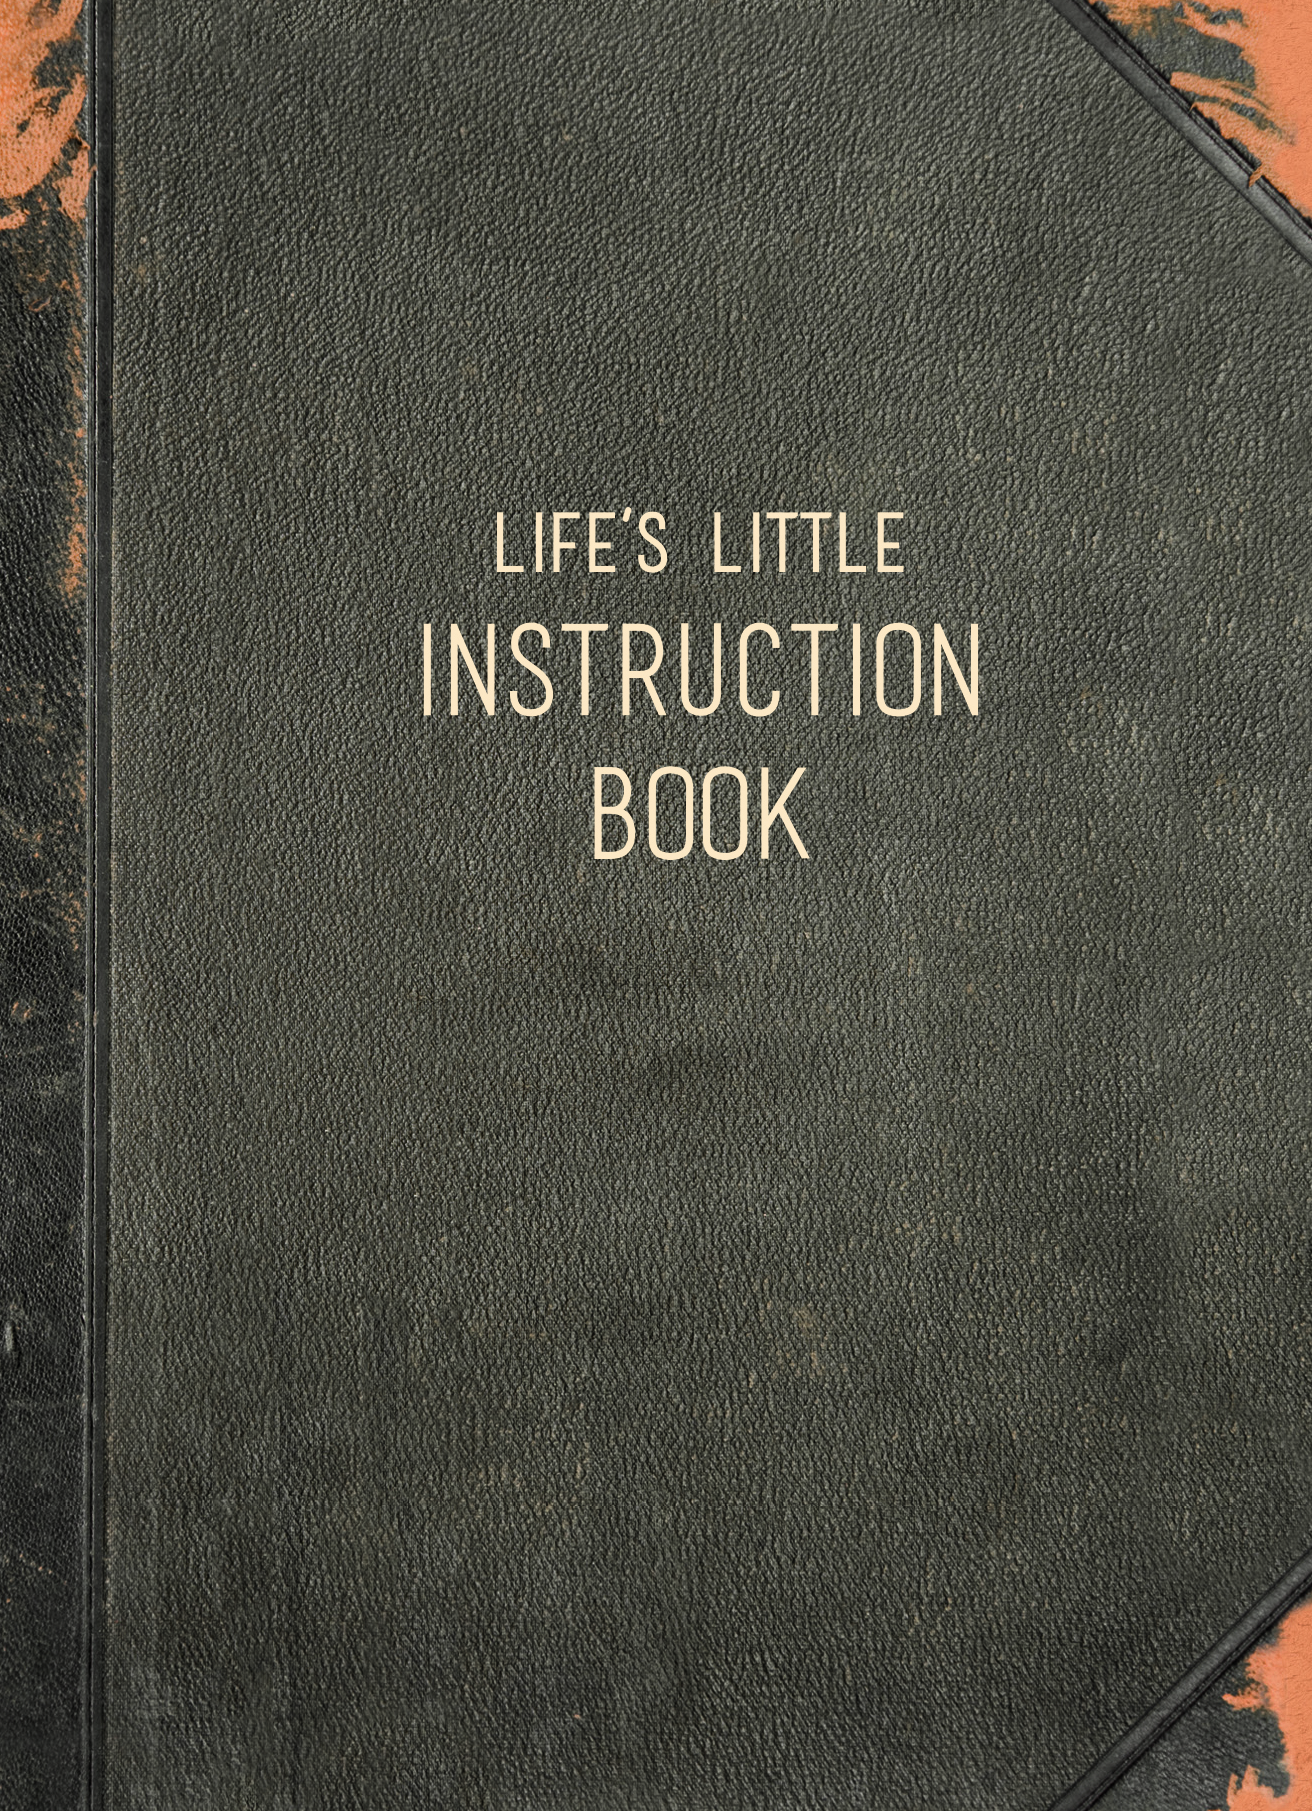 Little life book. A little Life книга. Instruction book. Instruction книга.